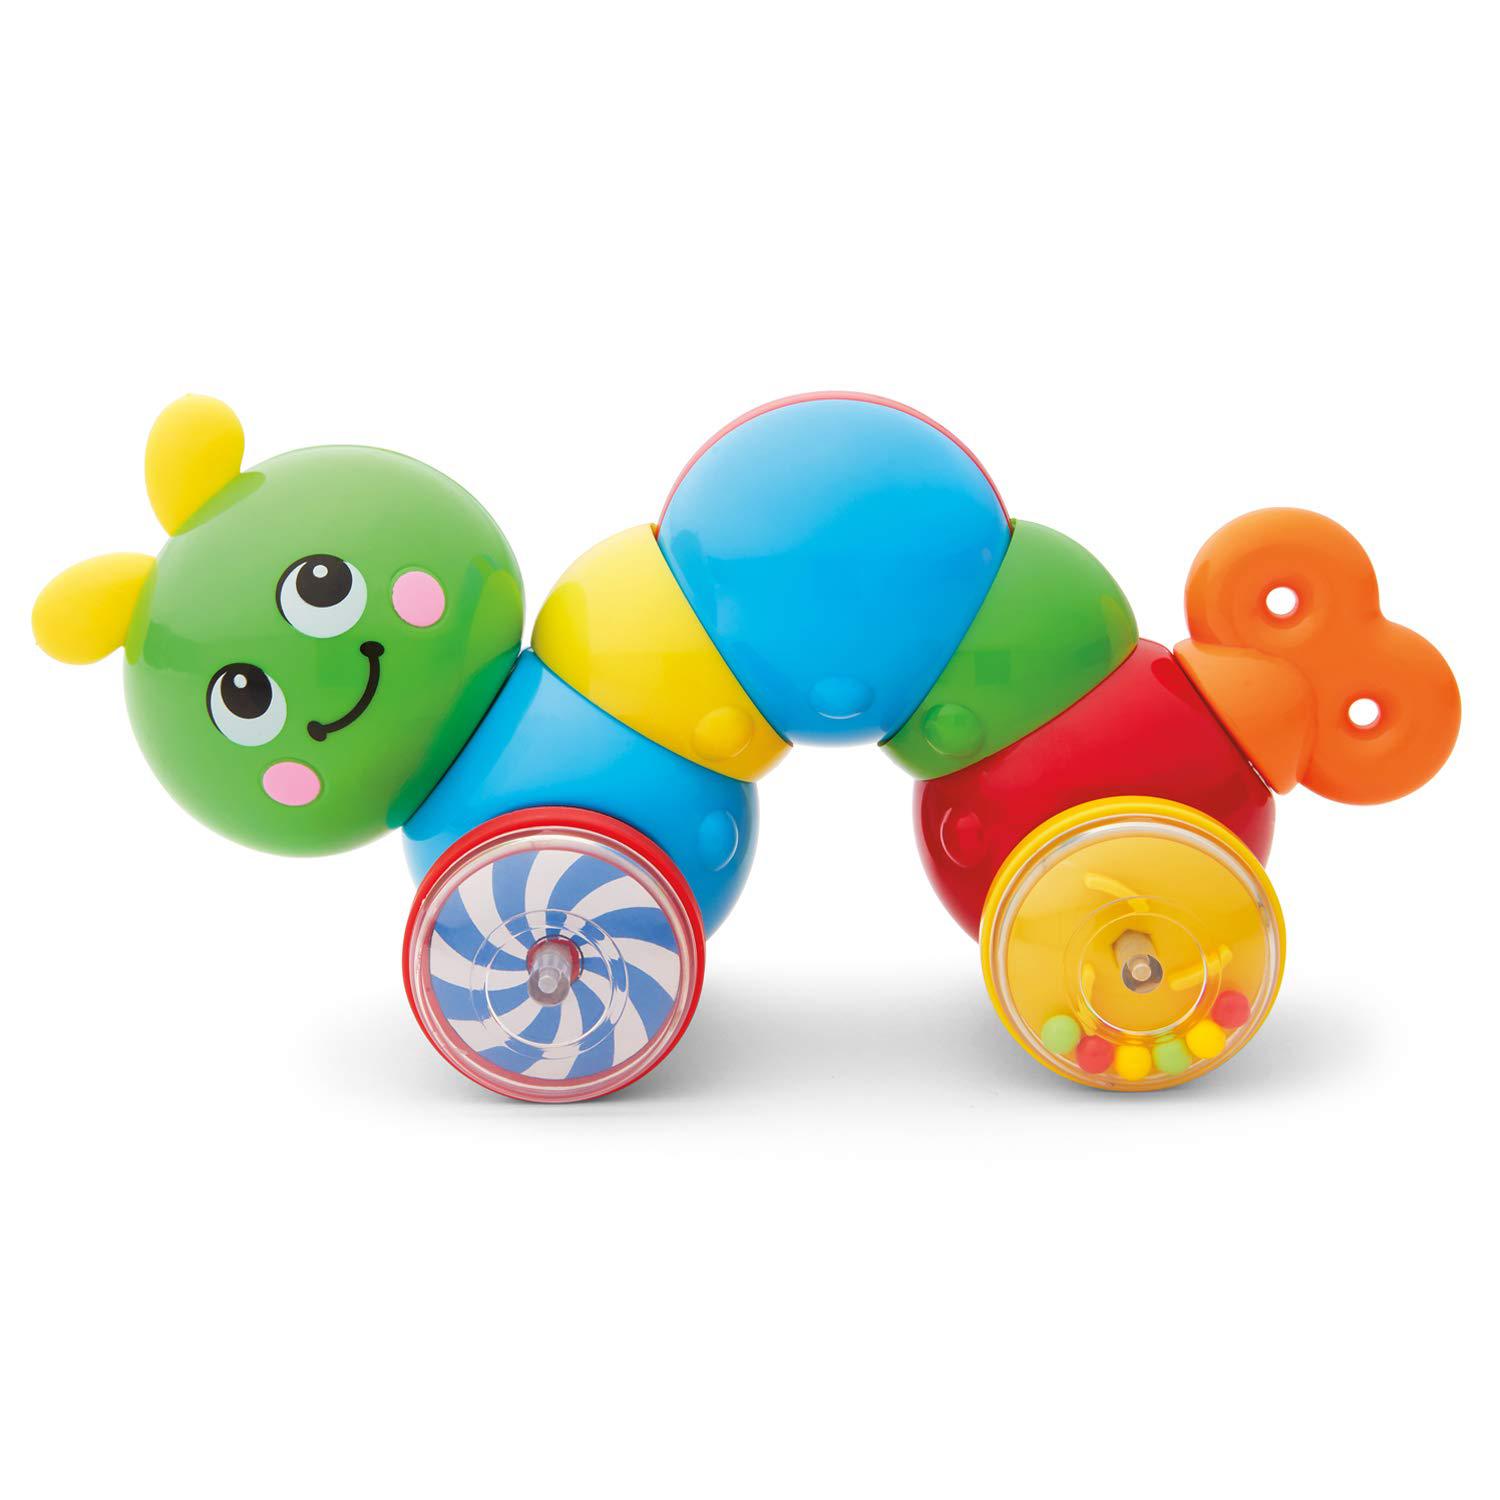 kidoozie press n go inchworm - developmental toy for toddlers and preschool age children